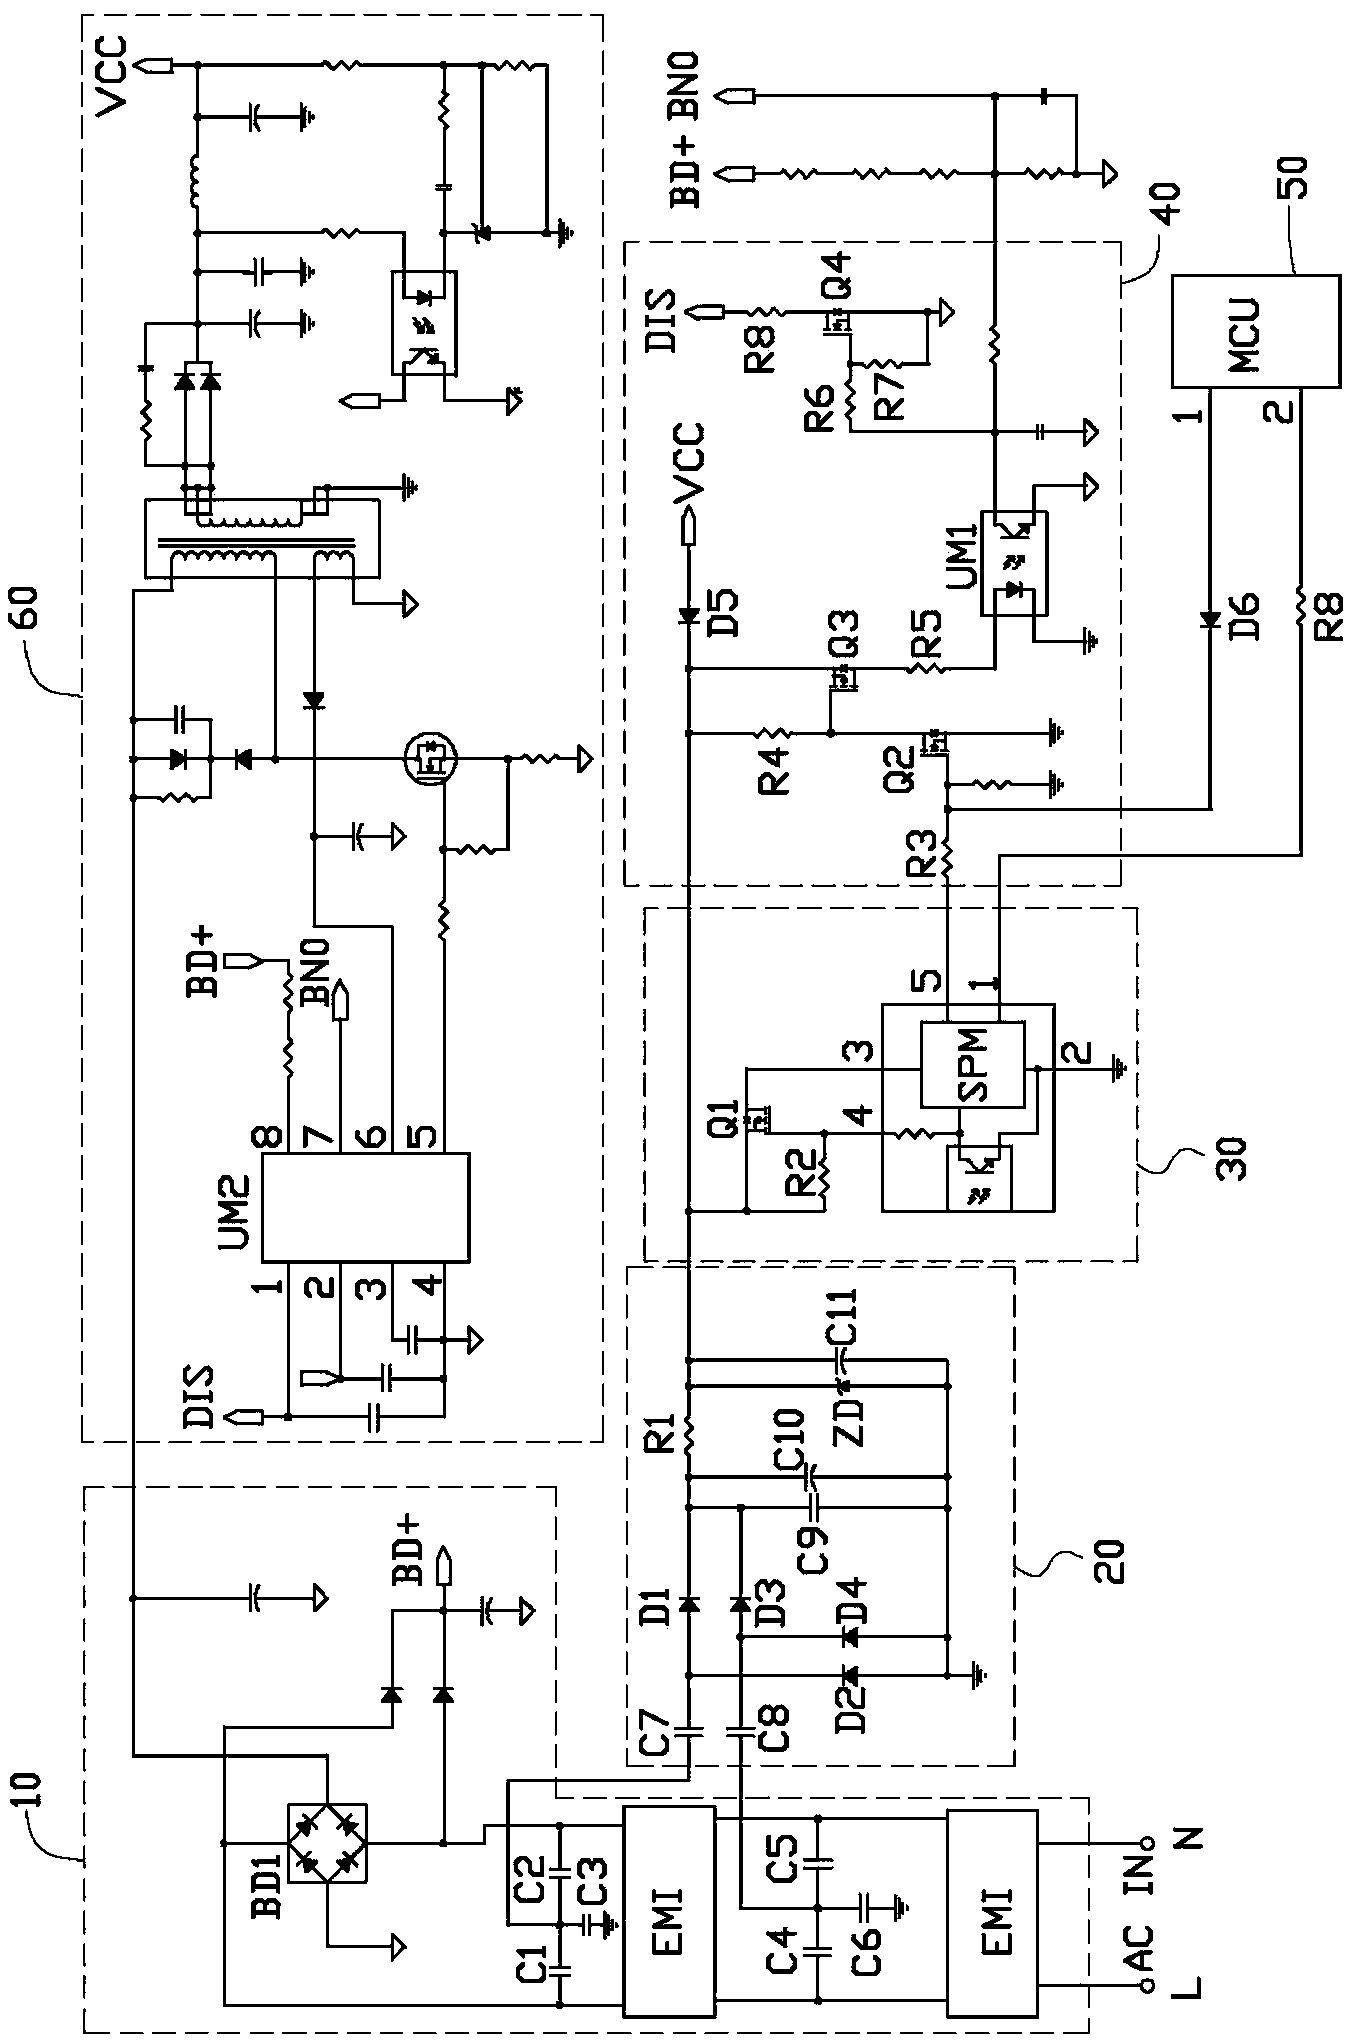 Remote control starting circuit